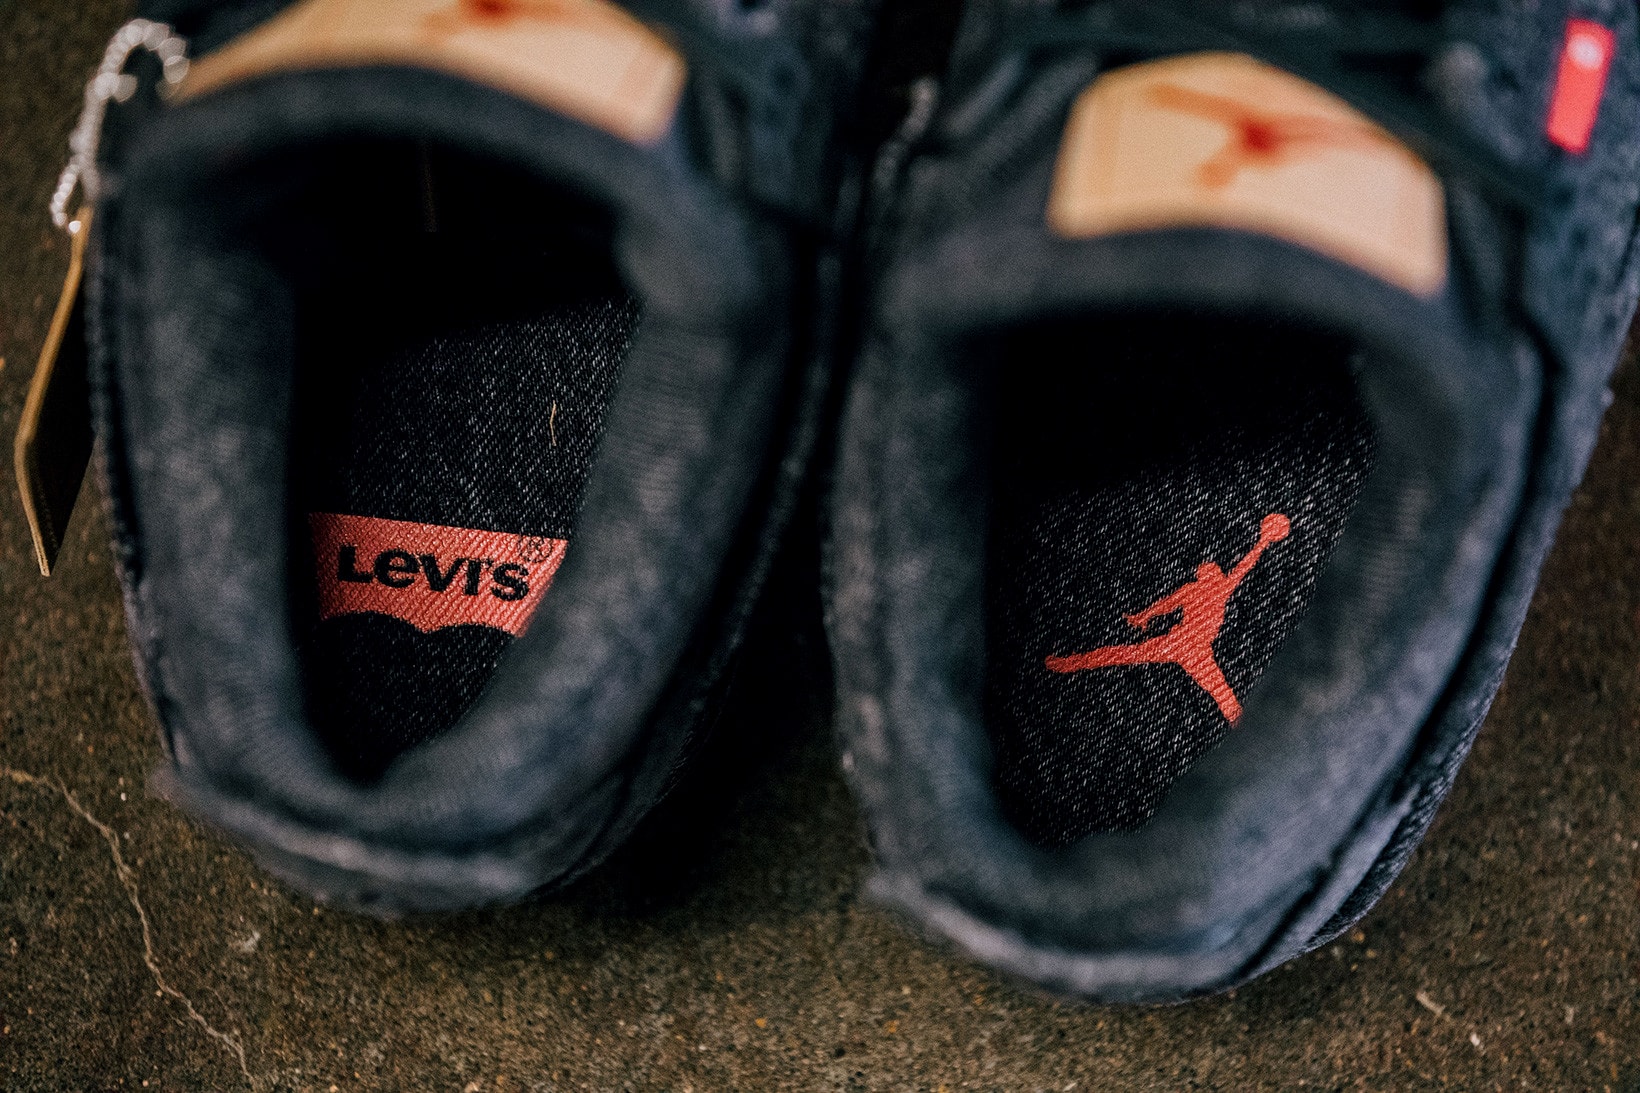 Levis air jordan 4 black and white global release date 2018 june footwear